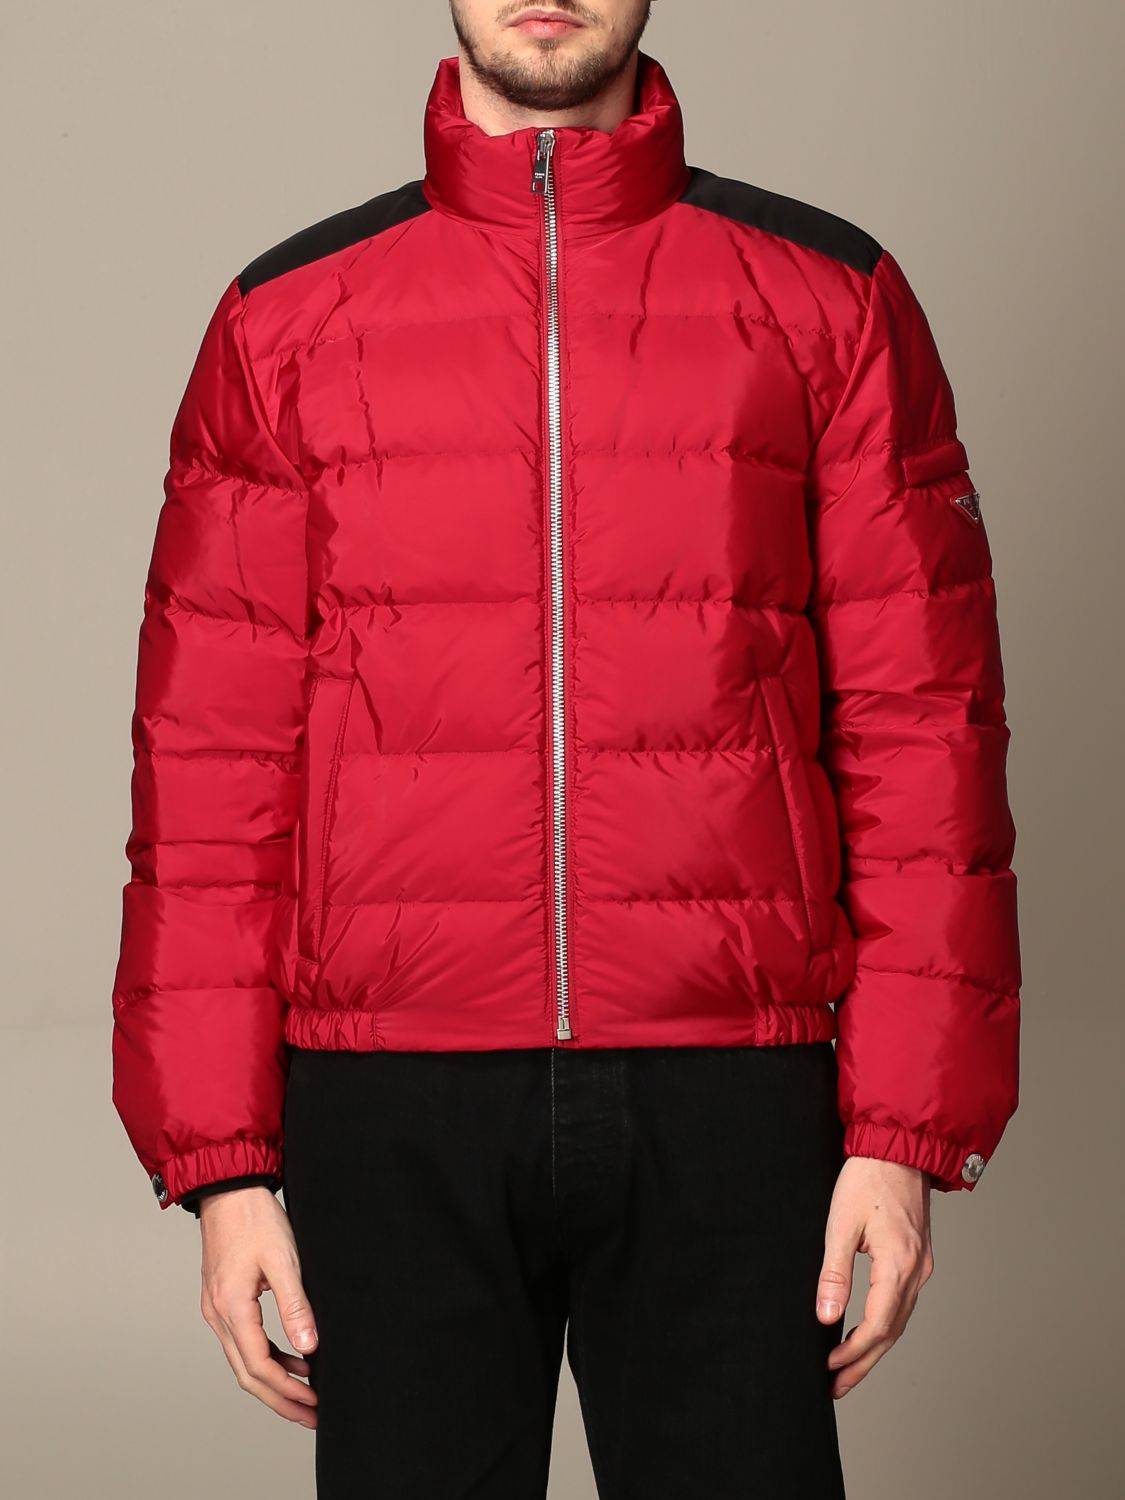 PRADA: down jacket in padded technical fabric - Red | Prada jacket SGX112  1WQ9 online on 